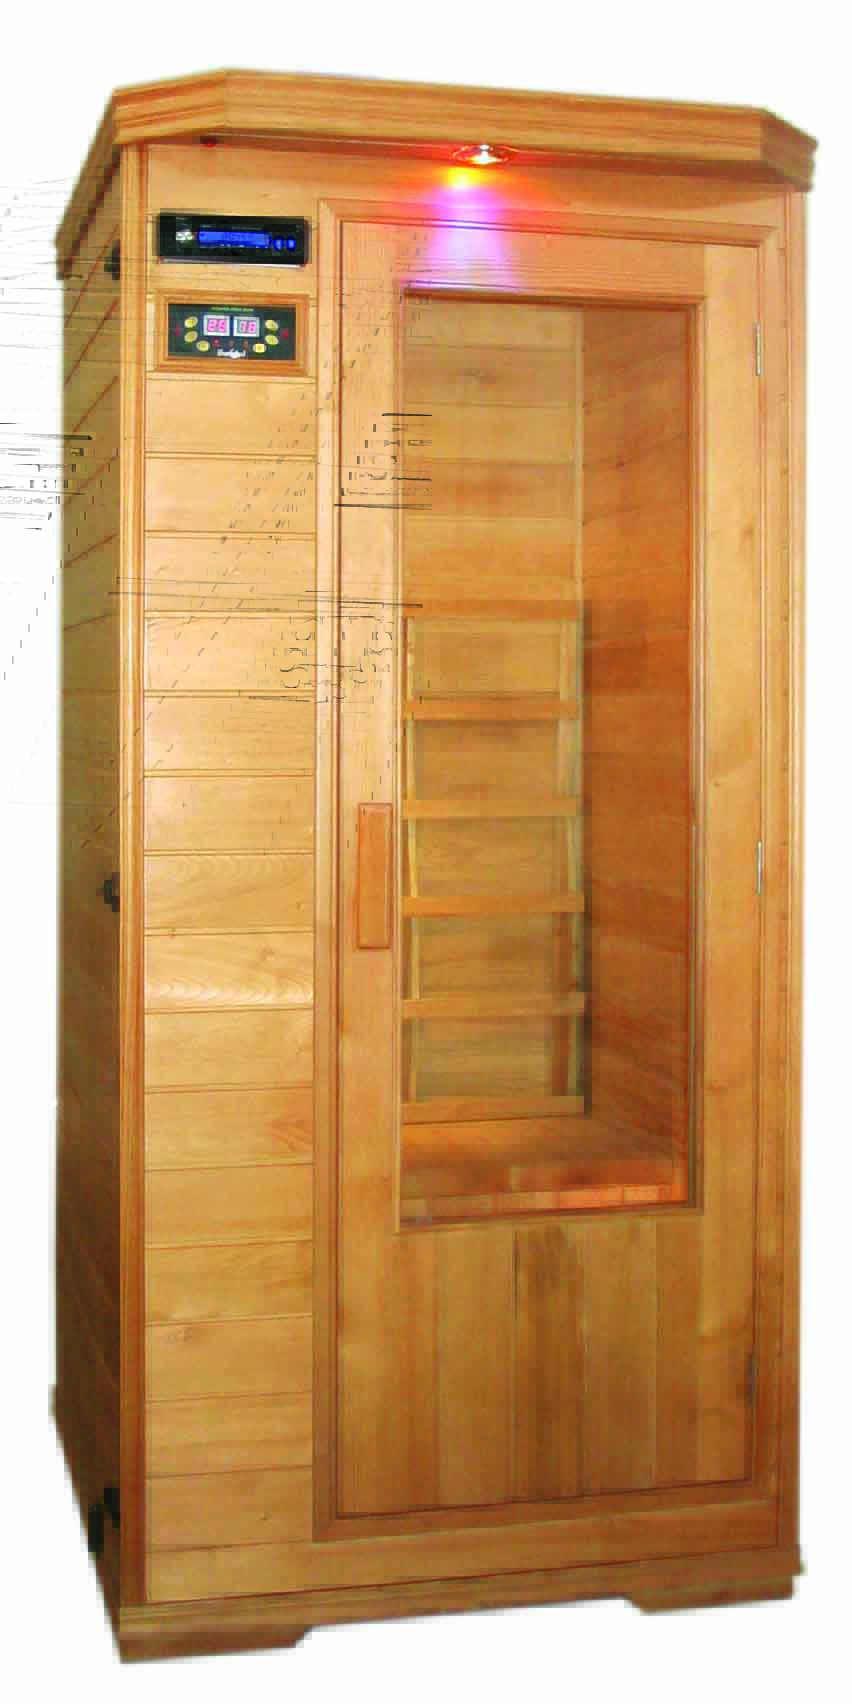 infrared sauna cabin for 1 person